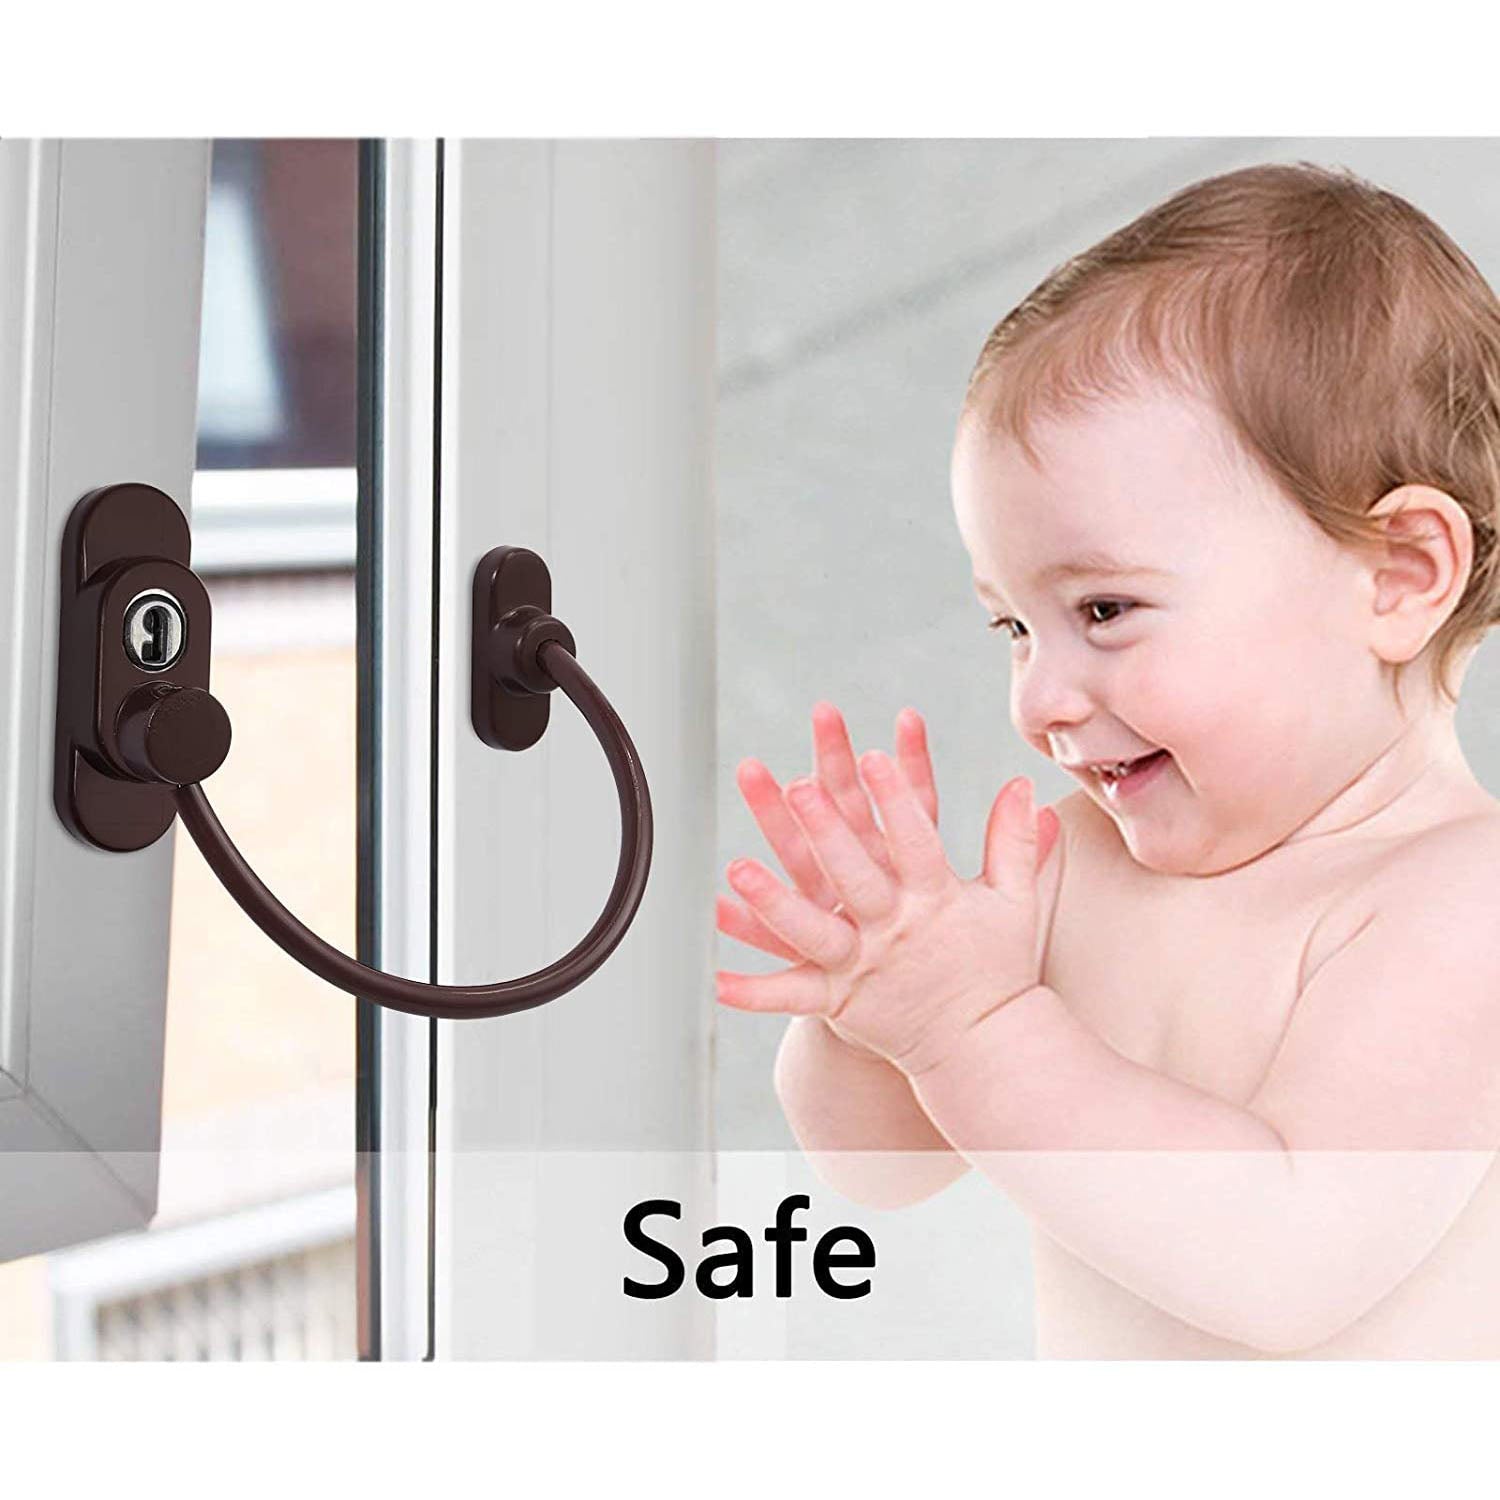 Kamtop Window Restrictor Locks 2 Packs Security Cable